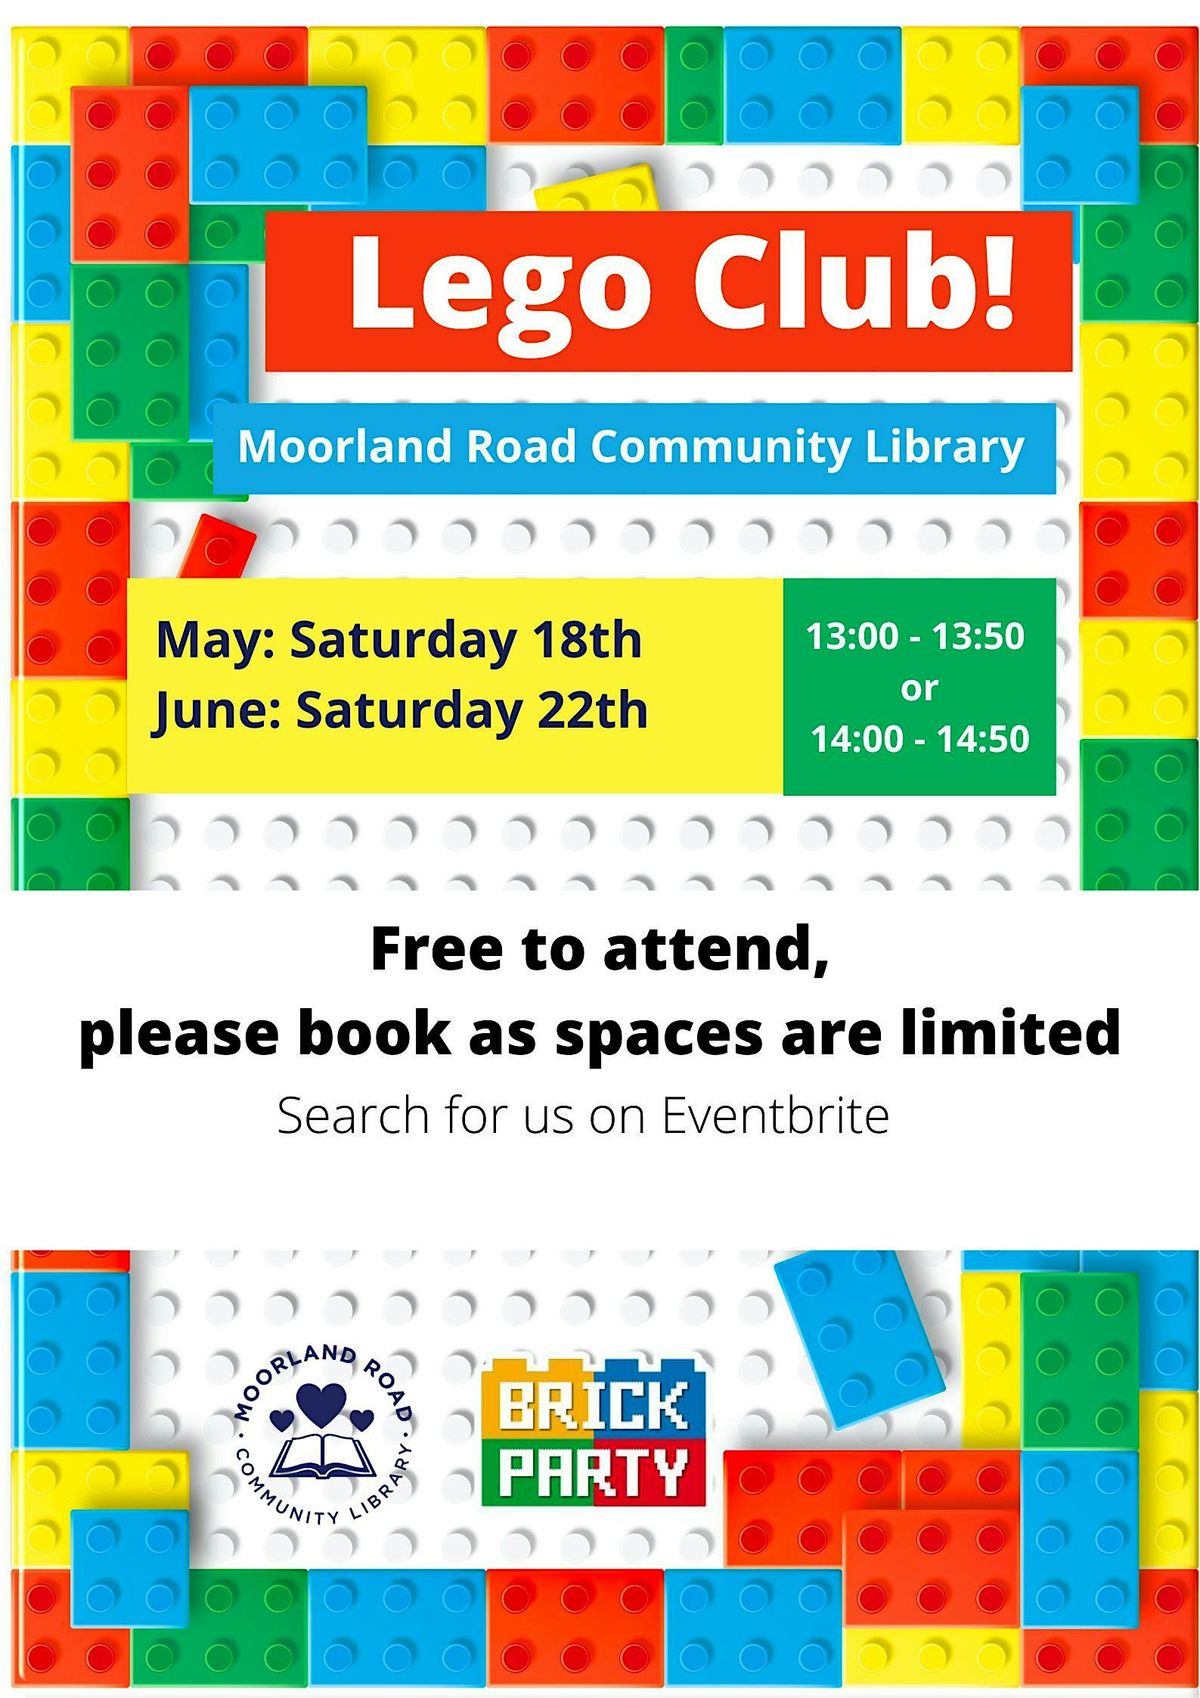 Lego Club at Moorland Road Community Library